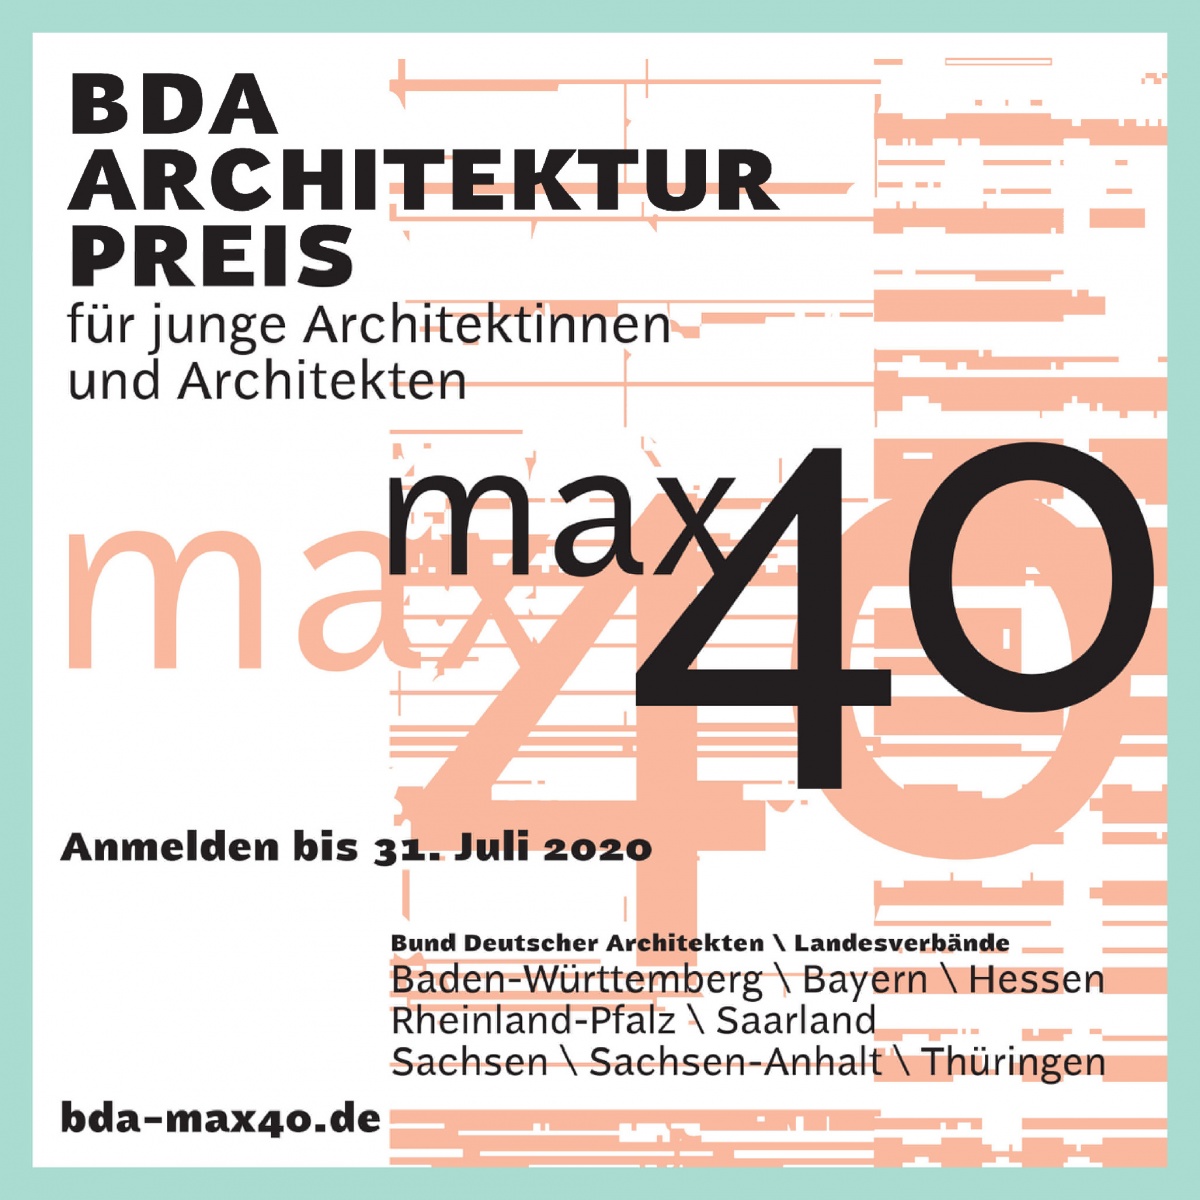 BDA-Architekturpreis max40, Bild: BDA